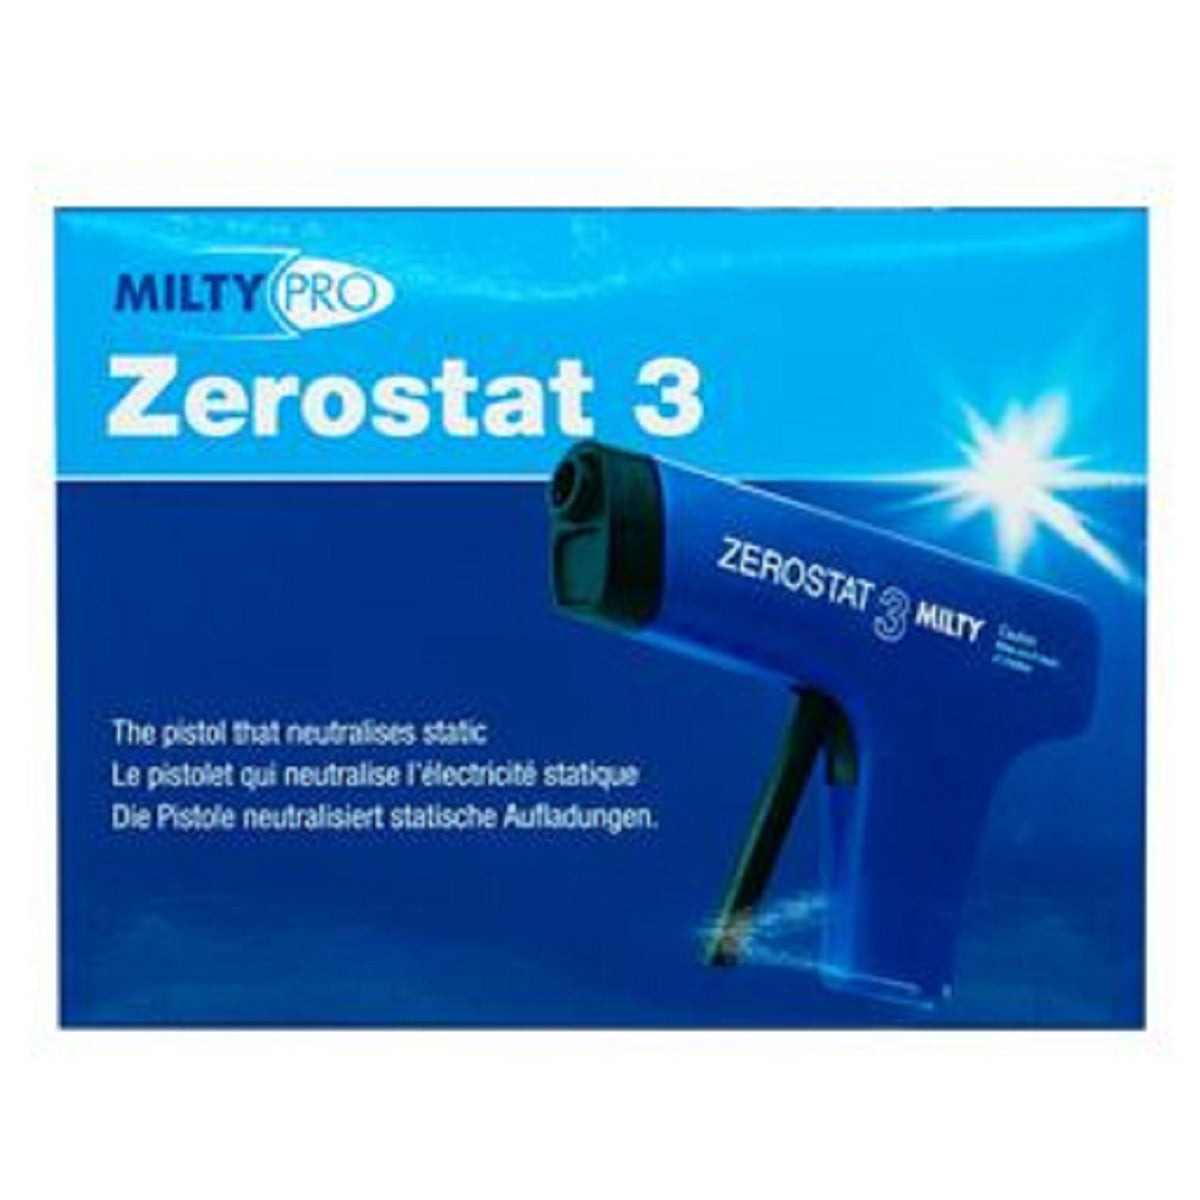 Goldring Milty Zerostat 3 Anti-Static Gun Record Cleaner - 4-Pack